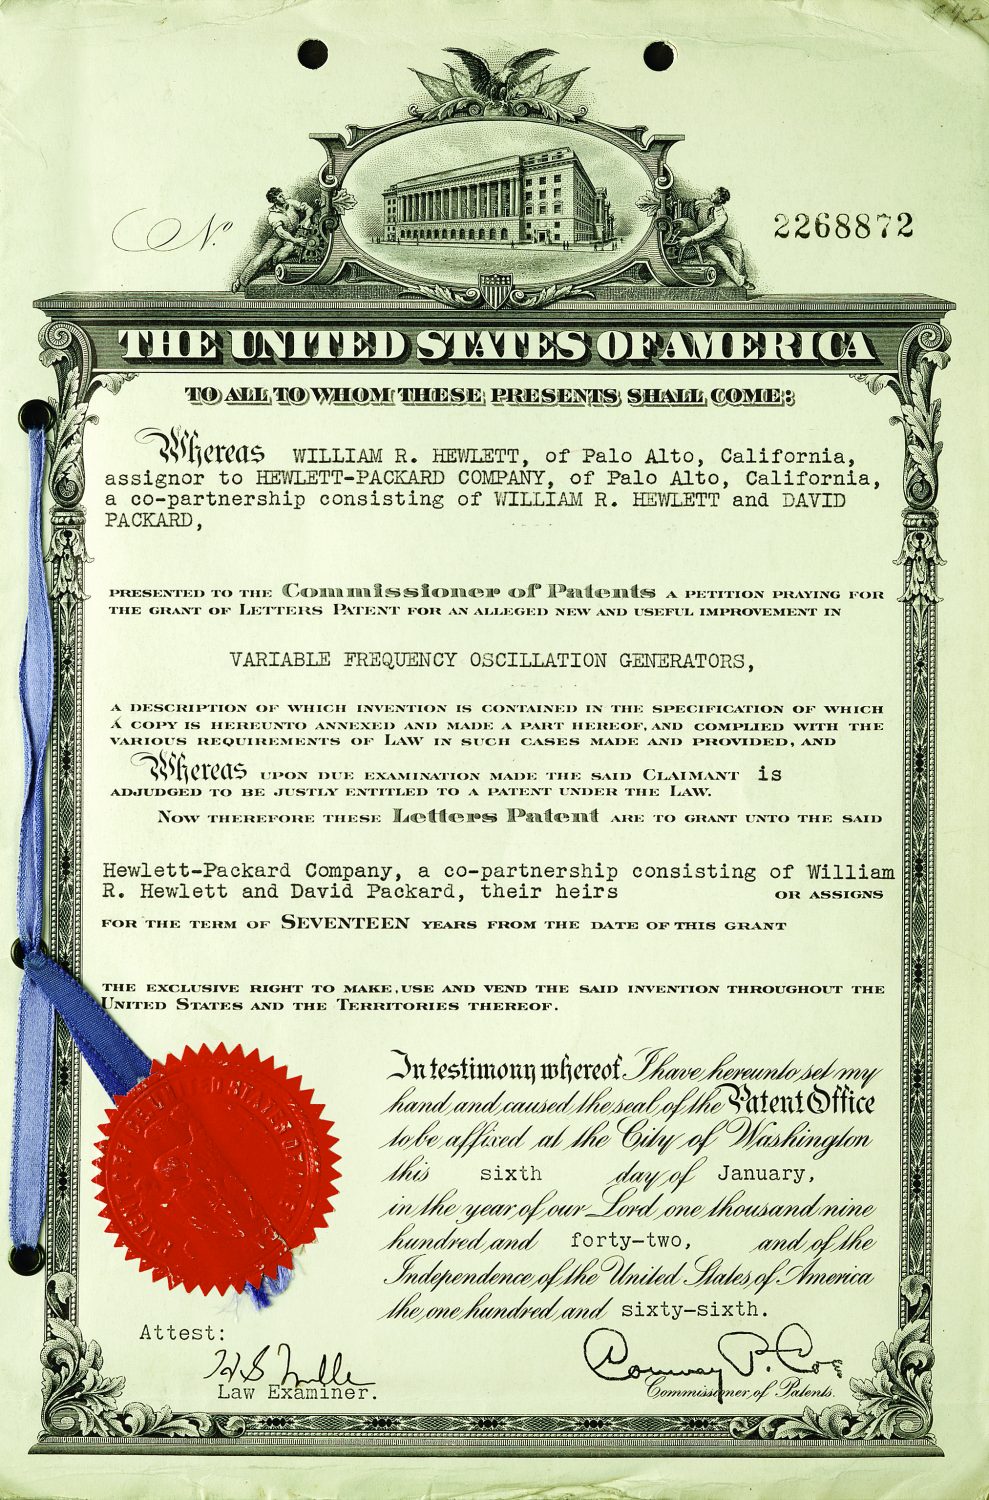 Hewlett-Packard's first patent, for Bill Hewlett's oscillator, granted on January 6, 1942.